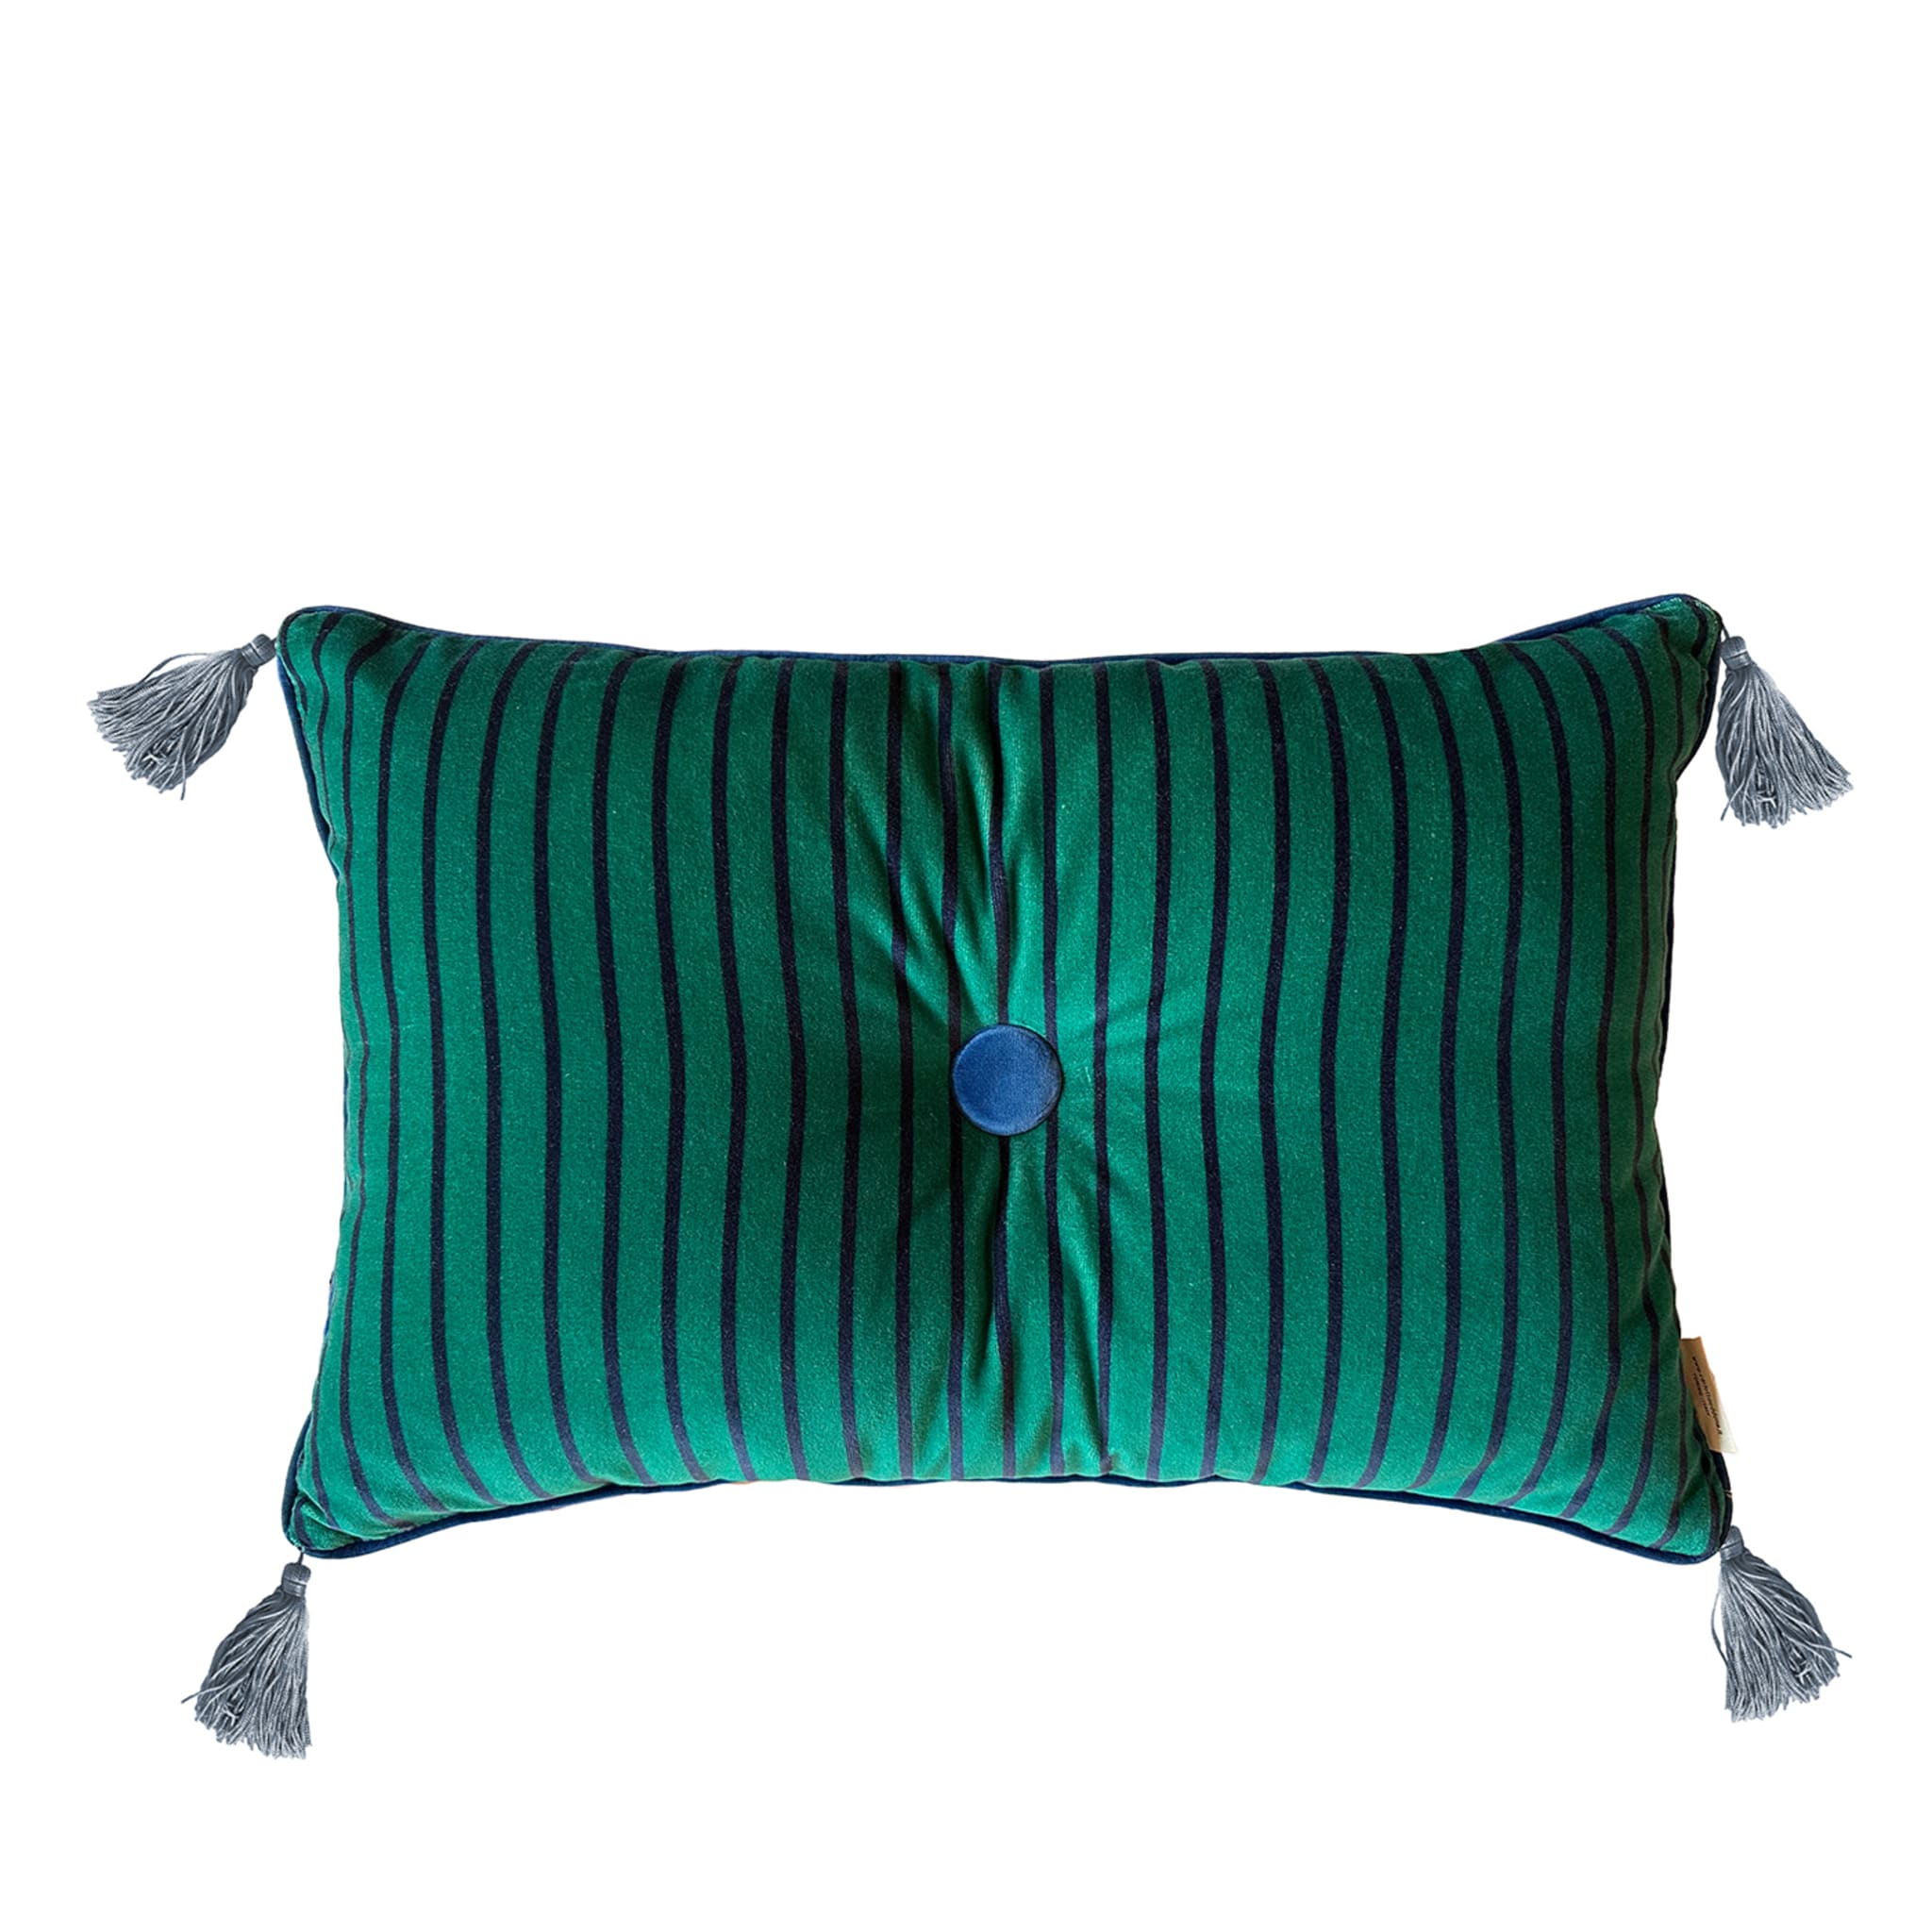 Sweet Pillow Rectangular Striped Teal Cushion - Main view